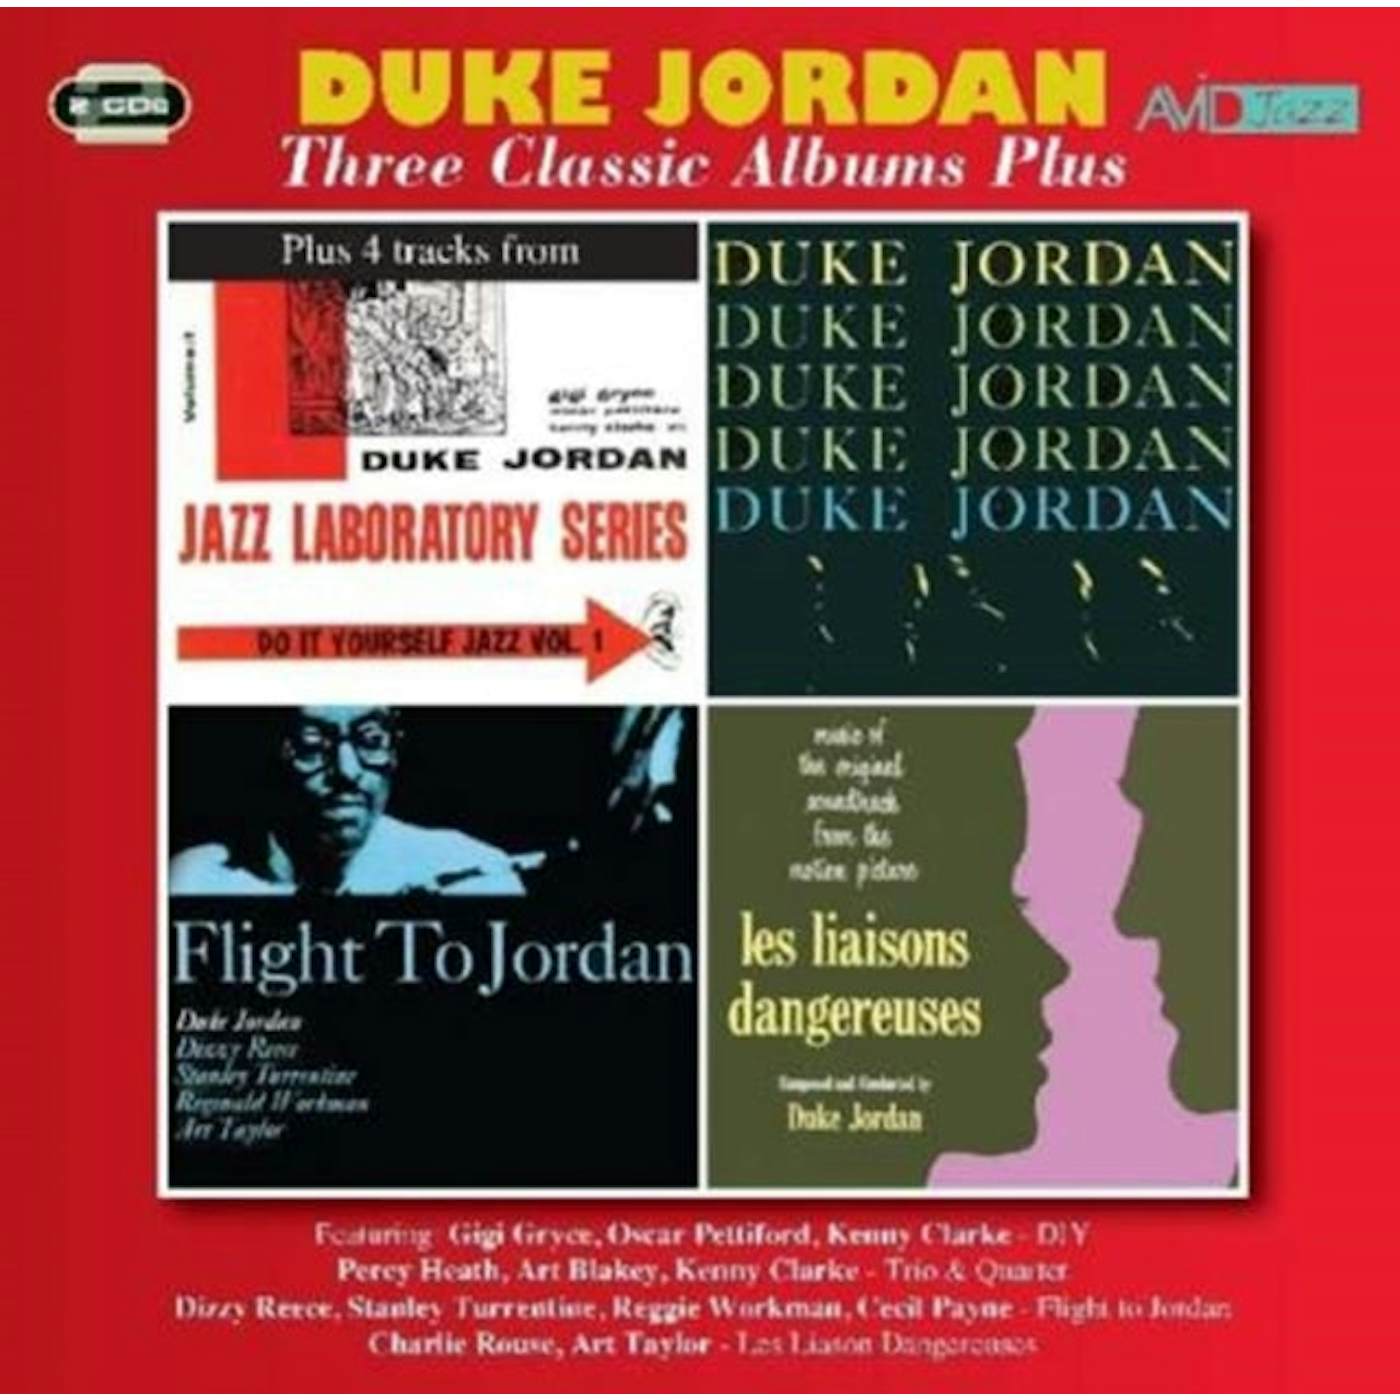 Duke Jordan CD - Three Classic Albums Plus (Trio & Quartet / Flight To Jordan / Les Liaisons Dangereuses)